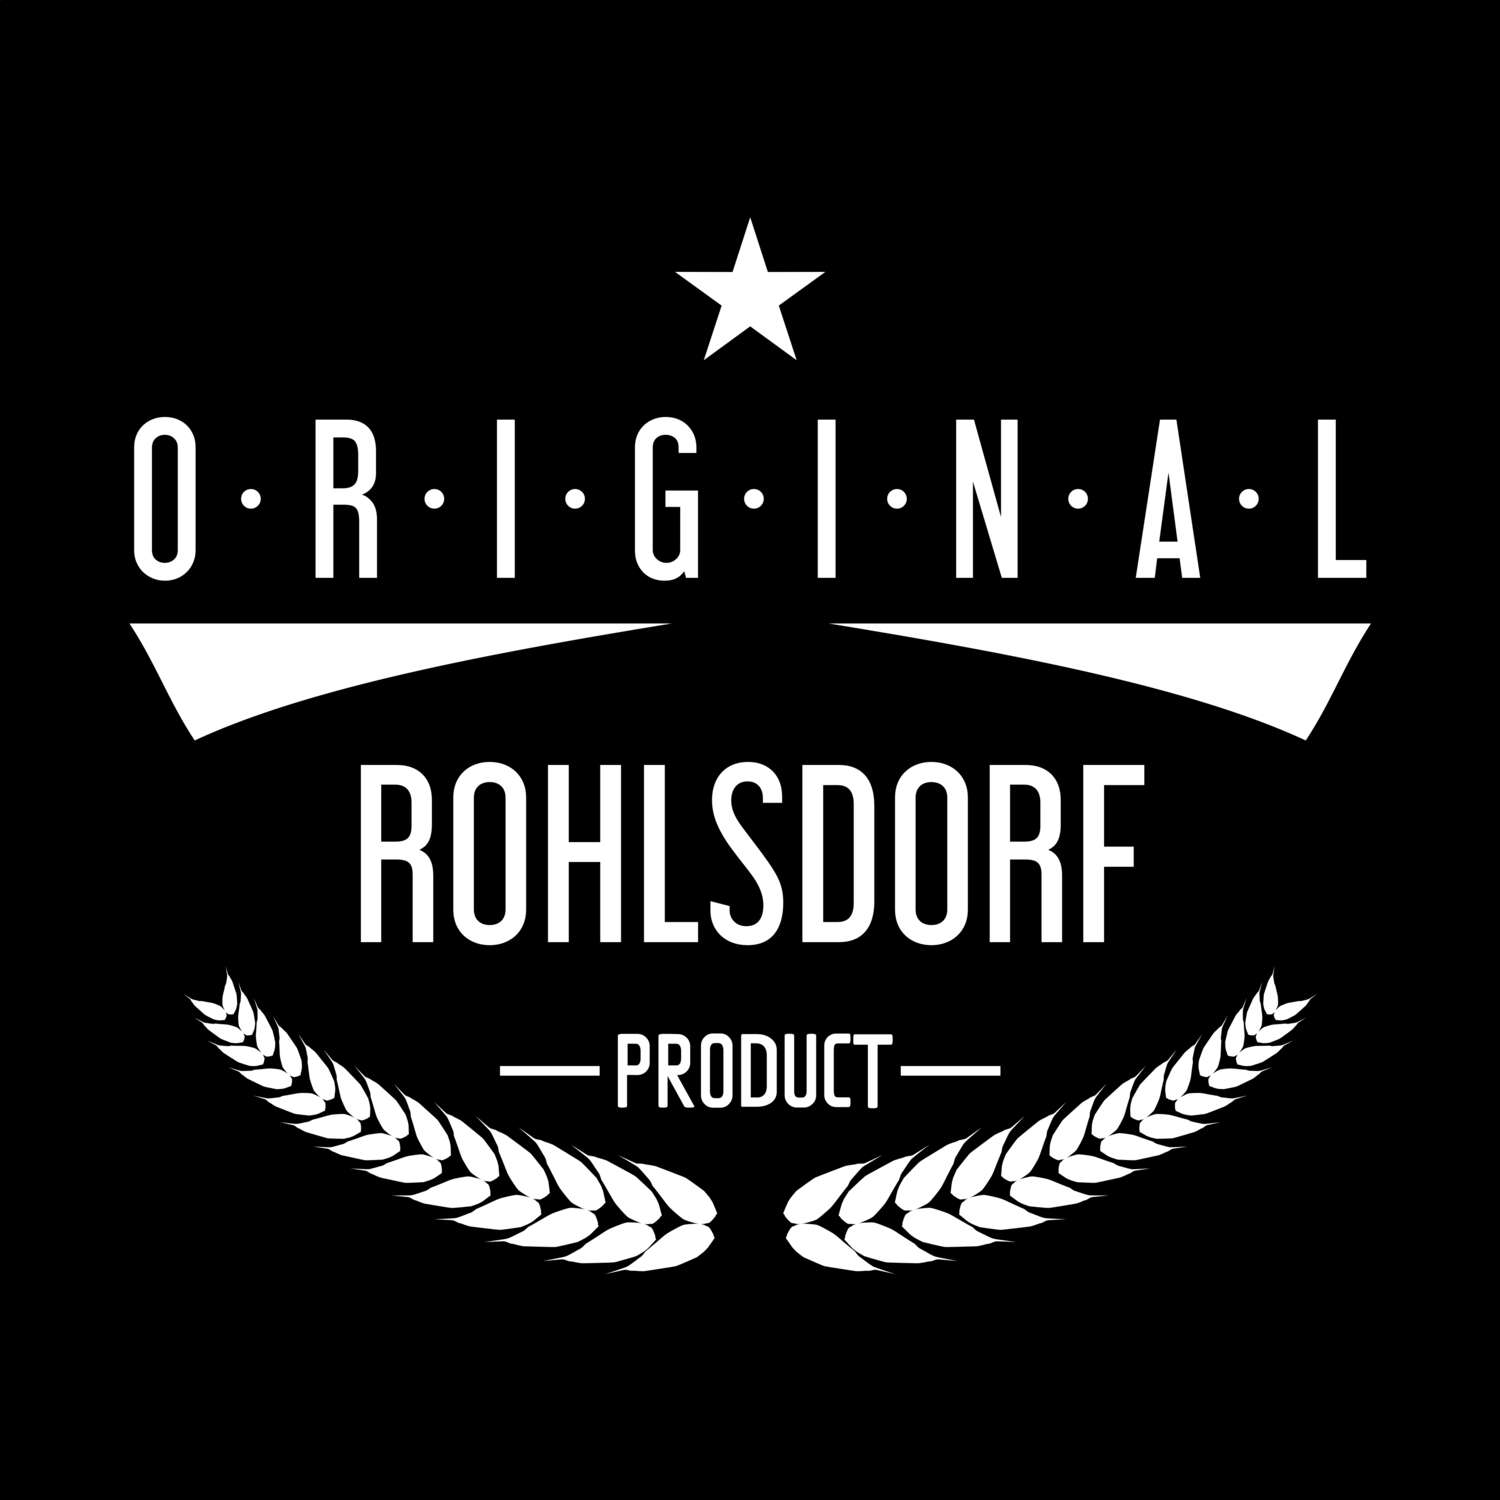 Rohlsdorf T-Shirt »Original Product«